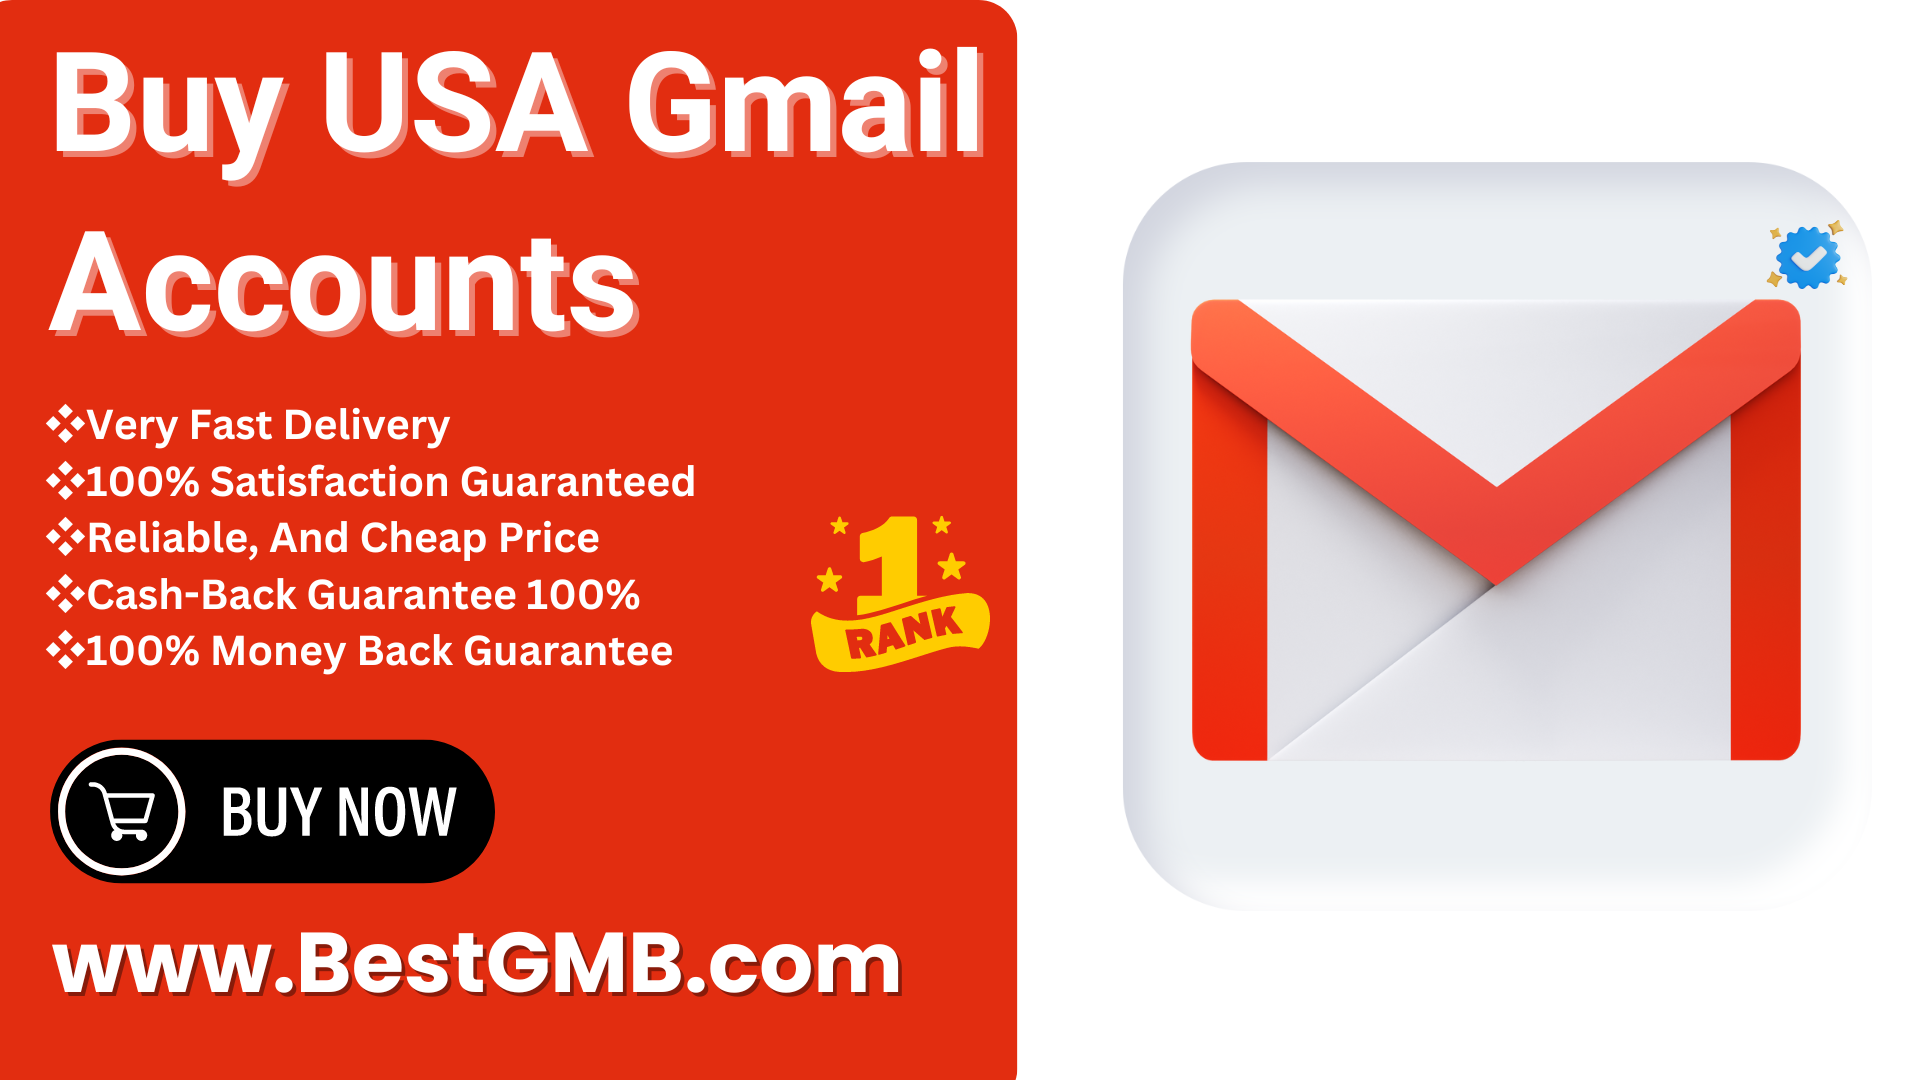 Buy USA Gmail Accounts